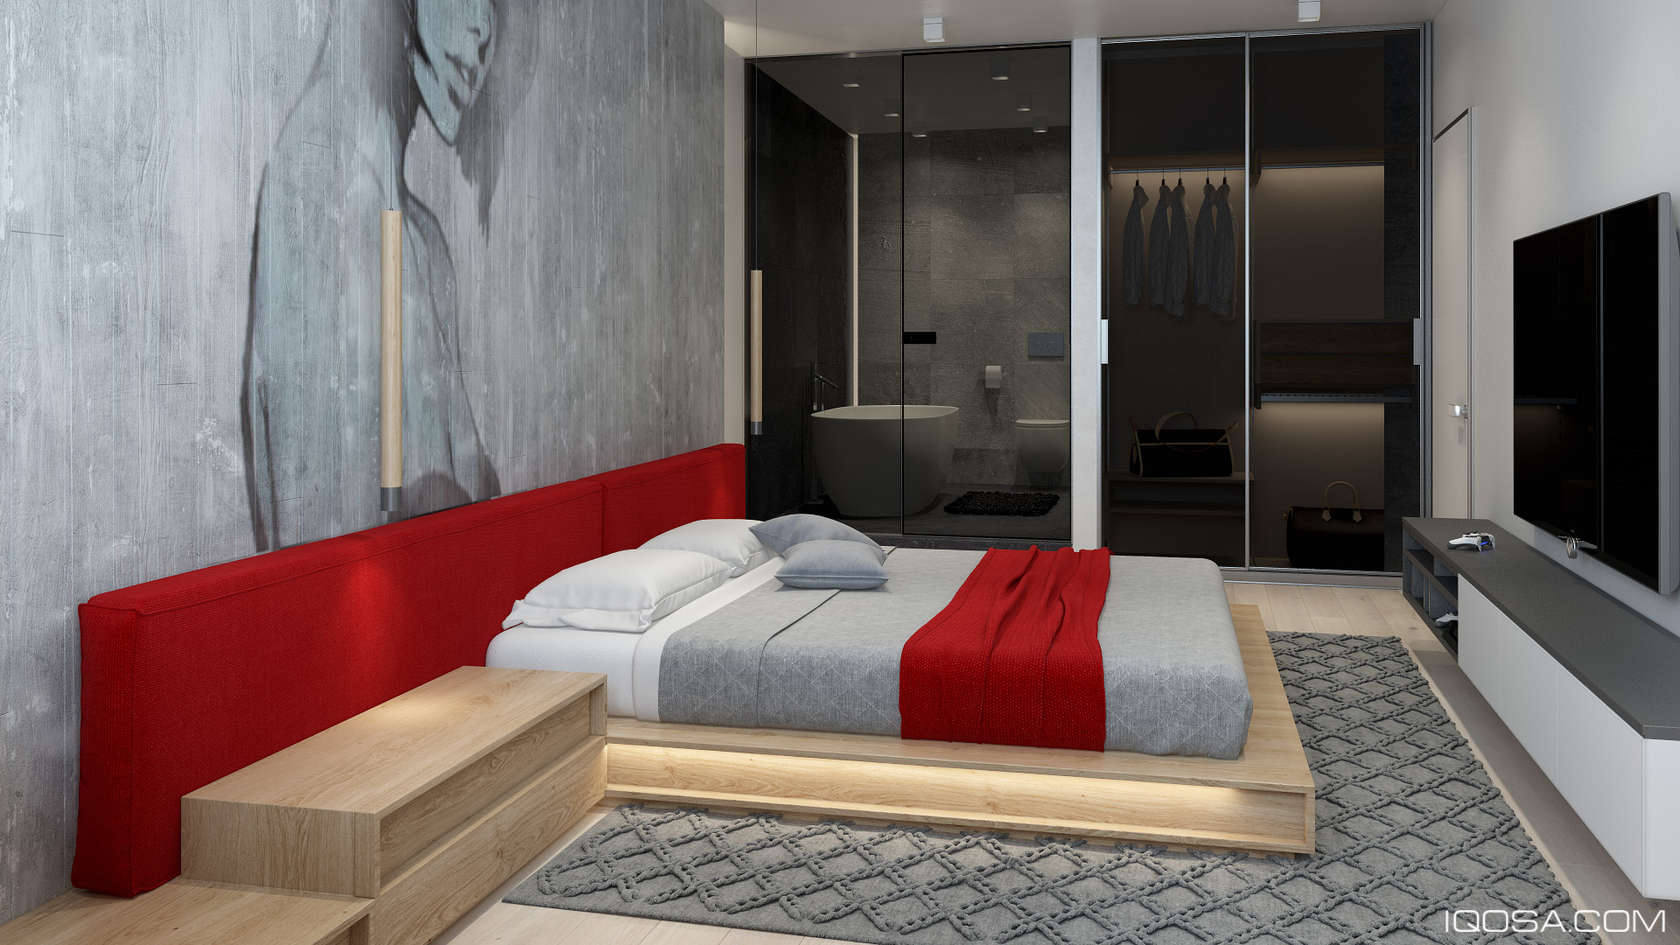 modern apartment studio luxury bedroom minimalist decor looks bed designs decorating platform grey roohome combined stunning iqosa plans approachable take